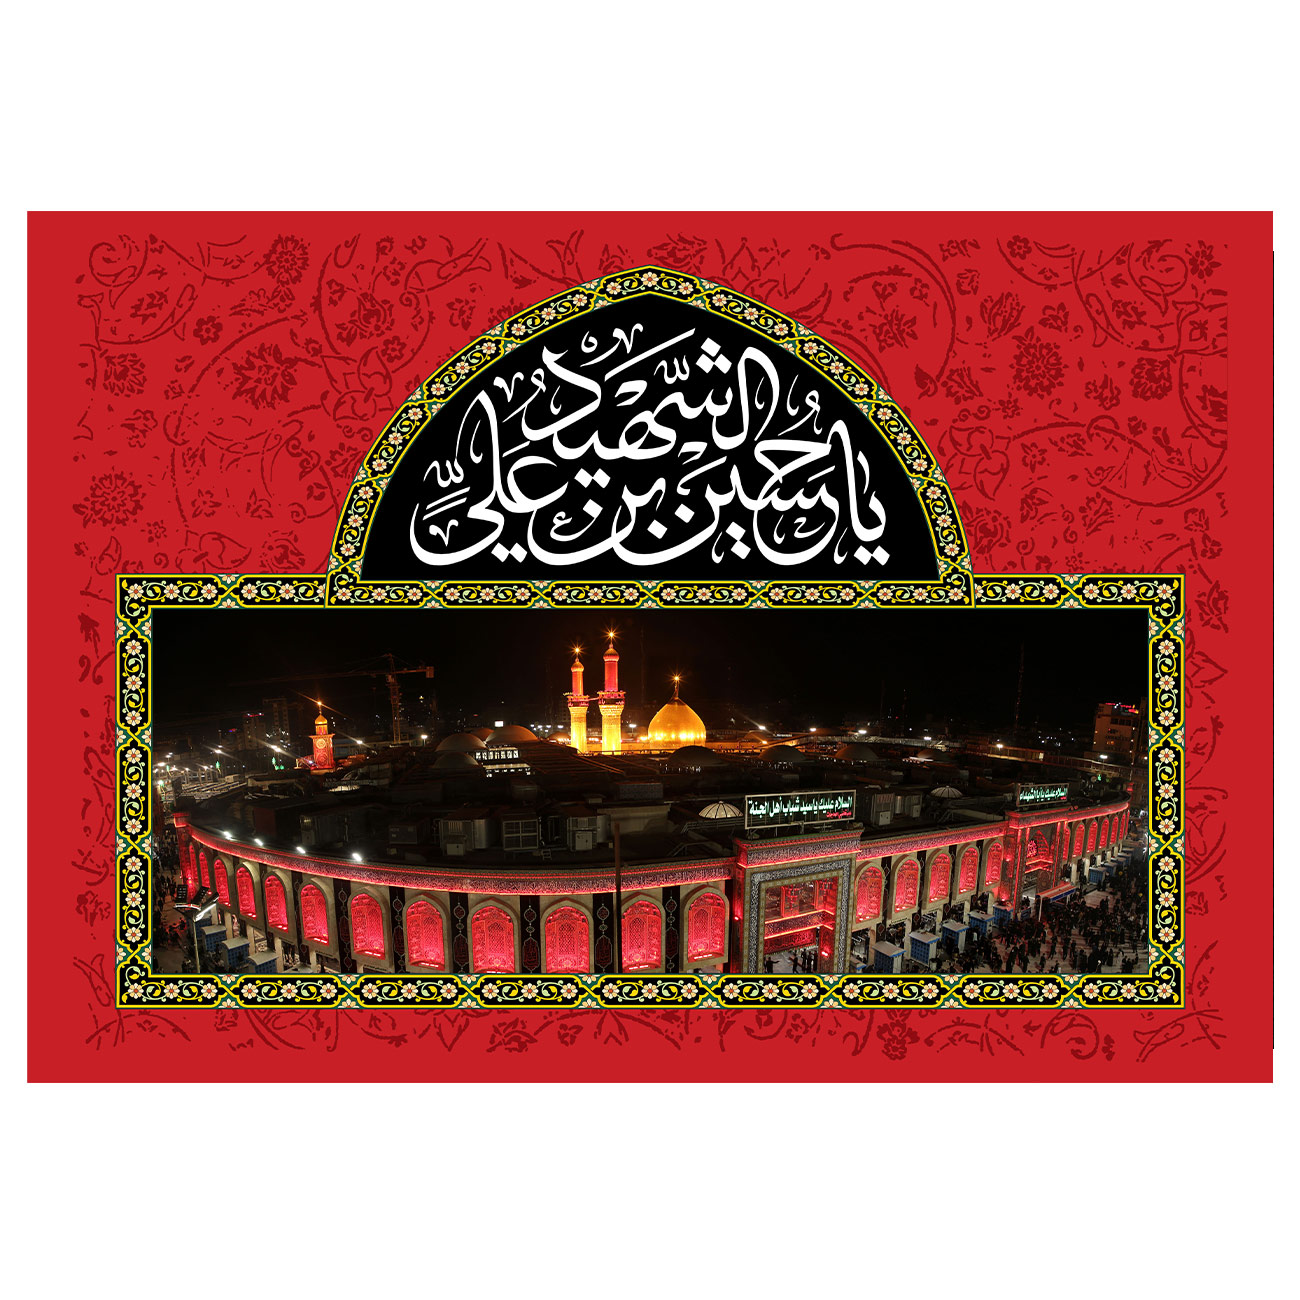  پرچم طرح نوشته مدل الشهید یا حسیین بن علی کد 2194